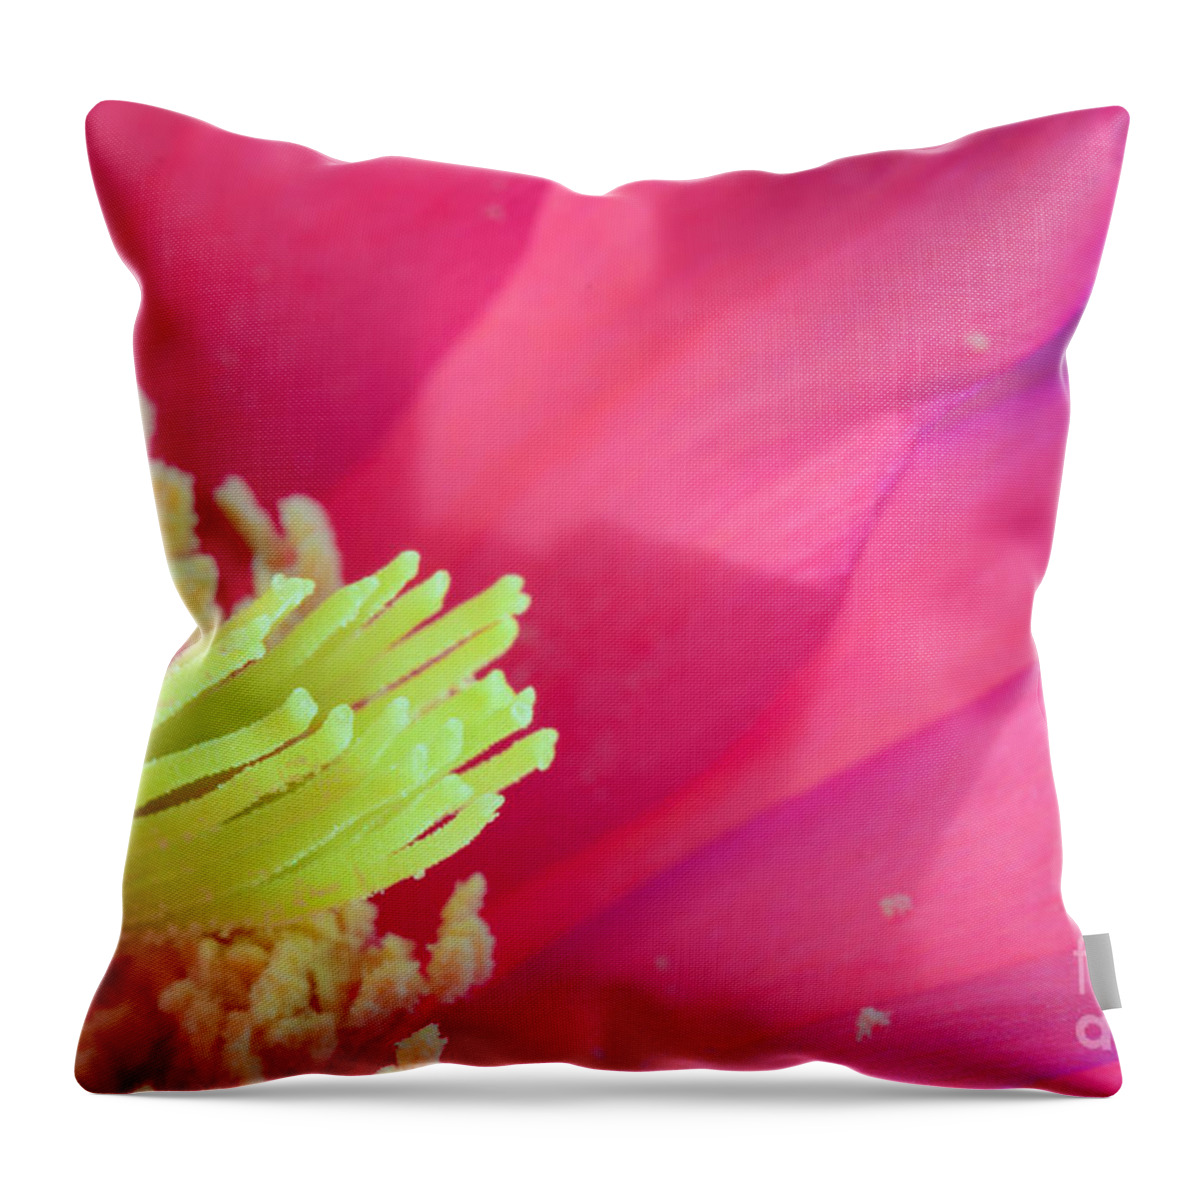 Pink Cactus Flower Throw Pillow featuring the photograph Pink Cactus Flower by Tamara Becker